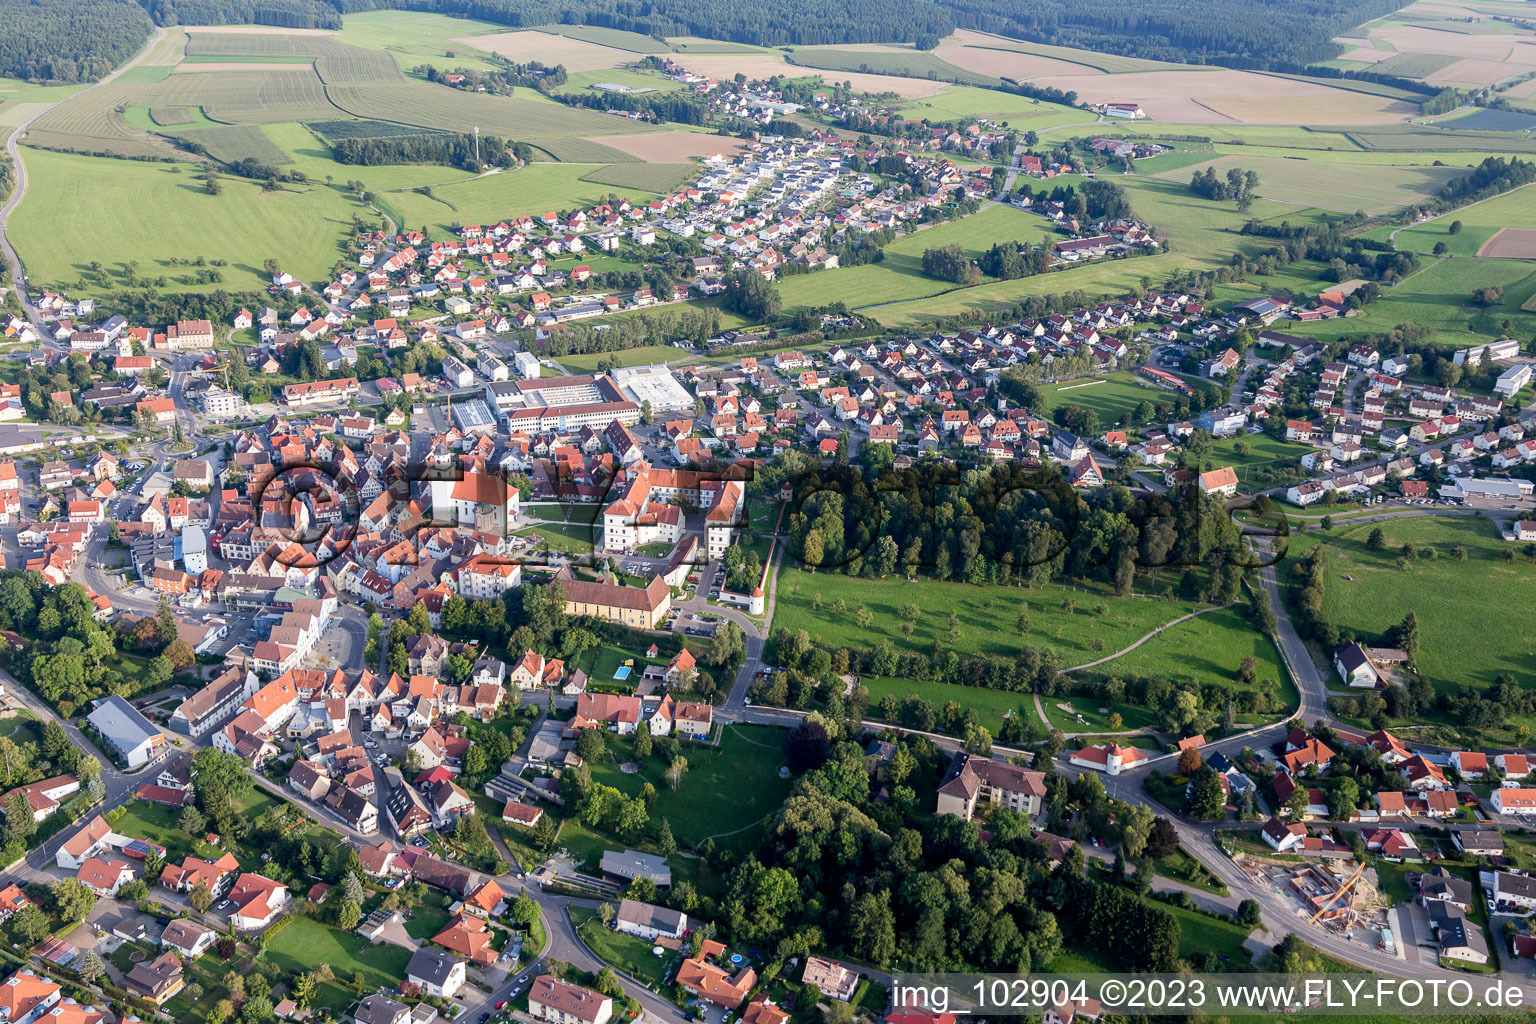 Meßkirch dans le département Bade-Wurtemberg, Allemagne depuis l'avion